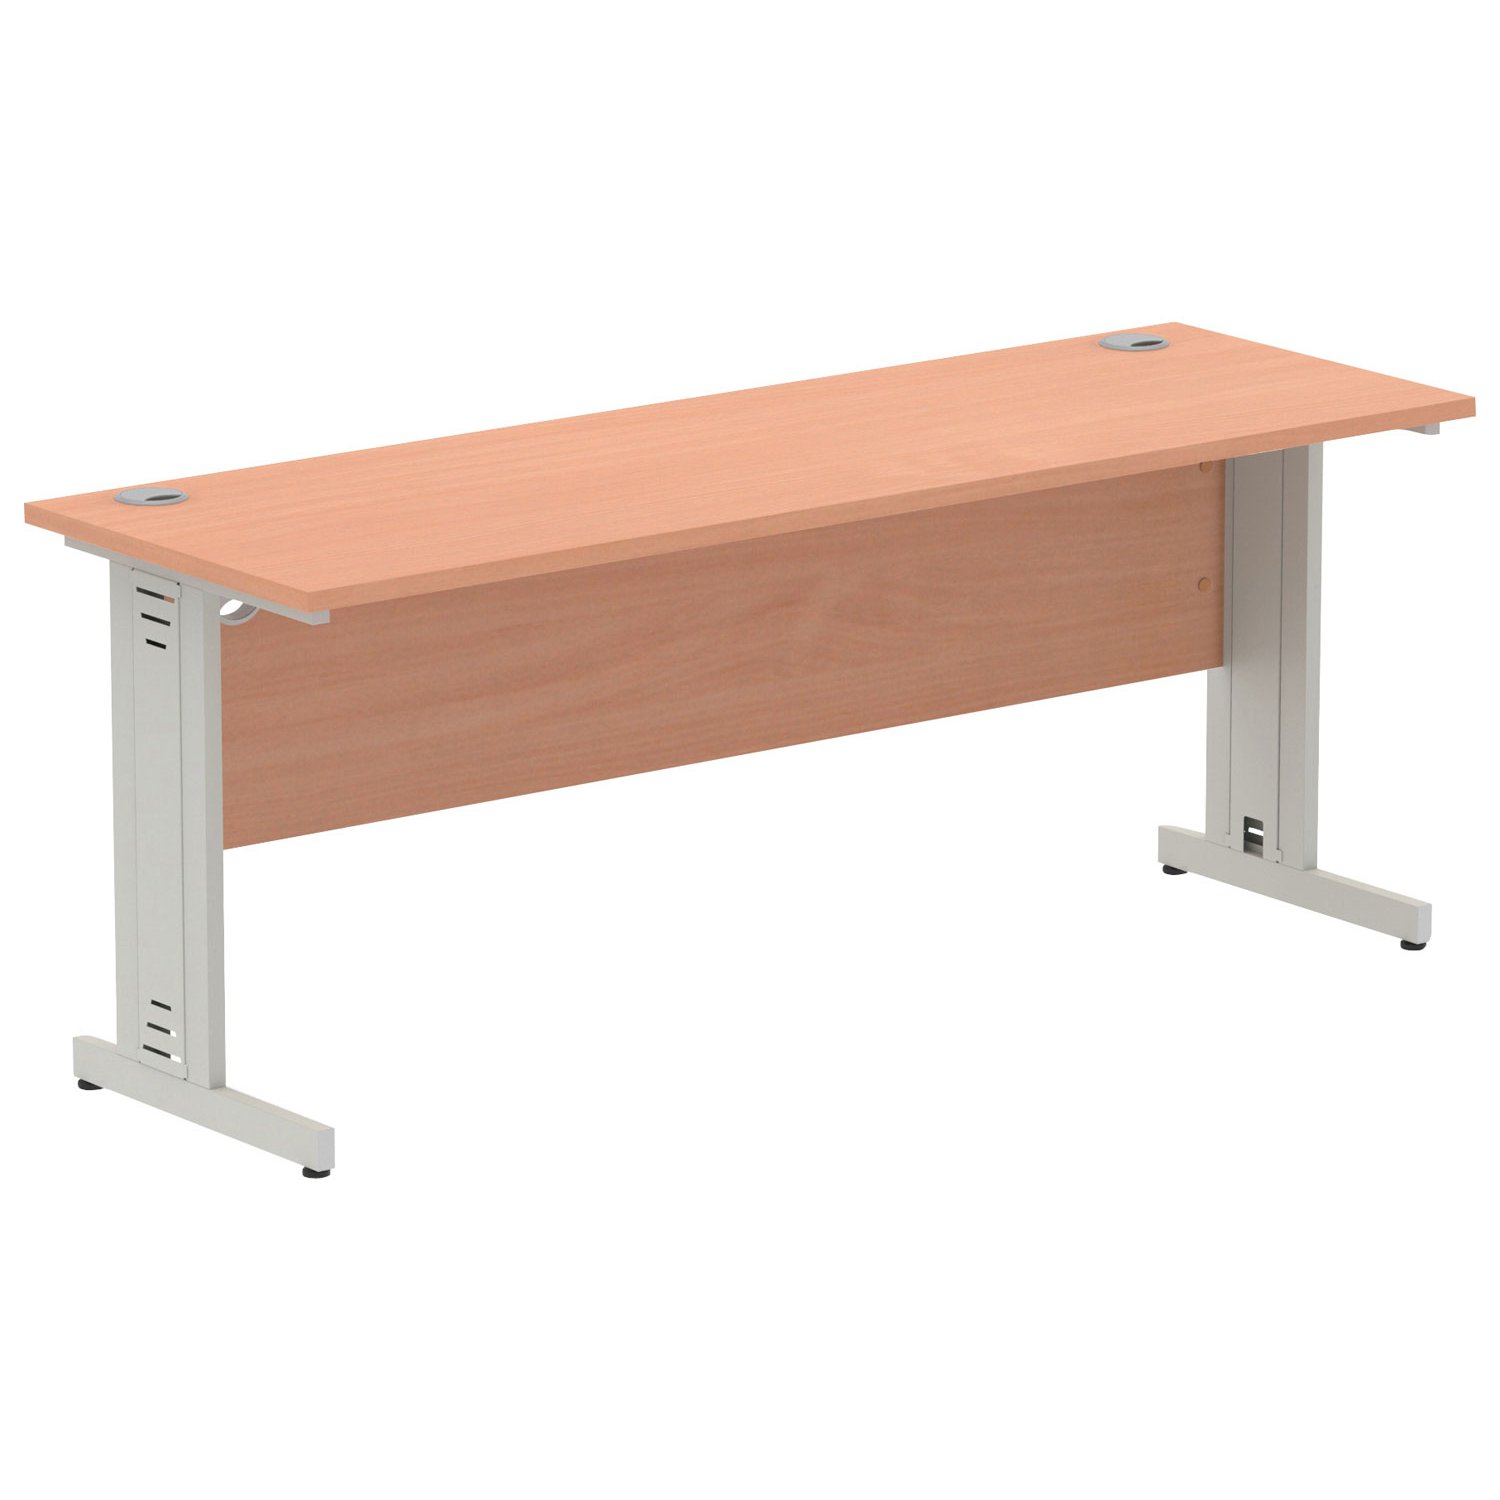 Vitali Deluxe Narrow Rectangular Desk (Silver Legs), 180wx60dx73h (cm), Beech